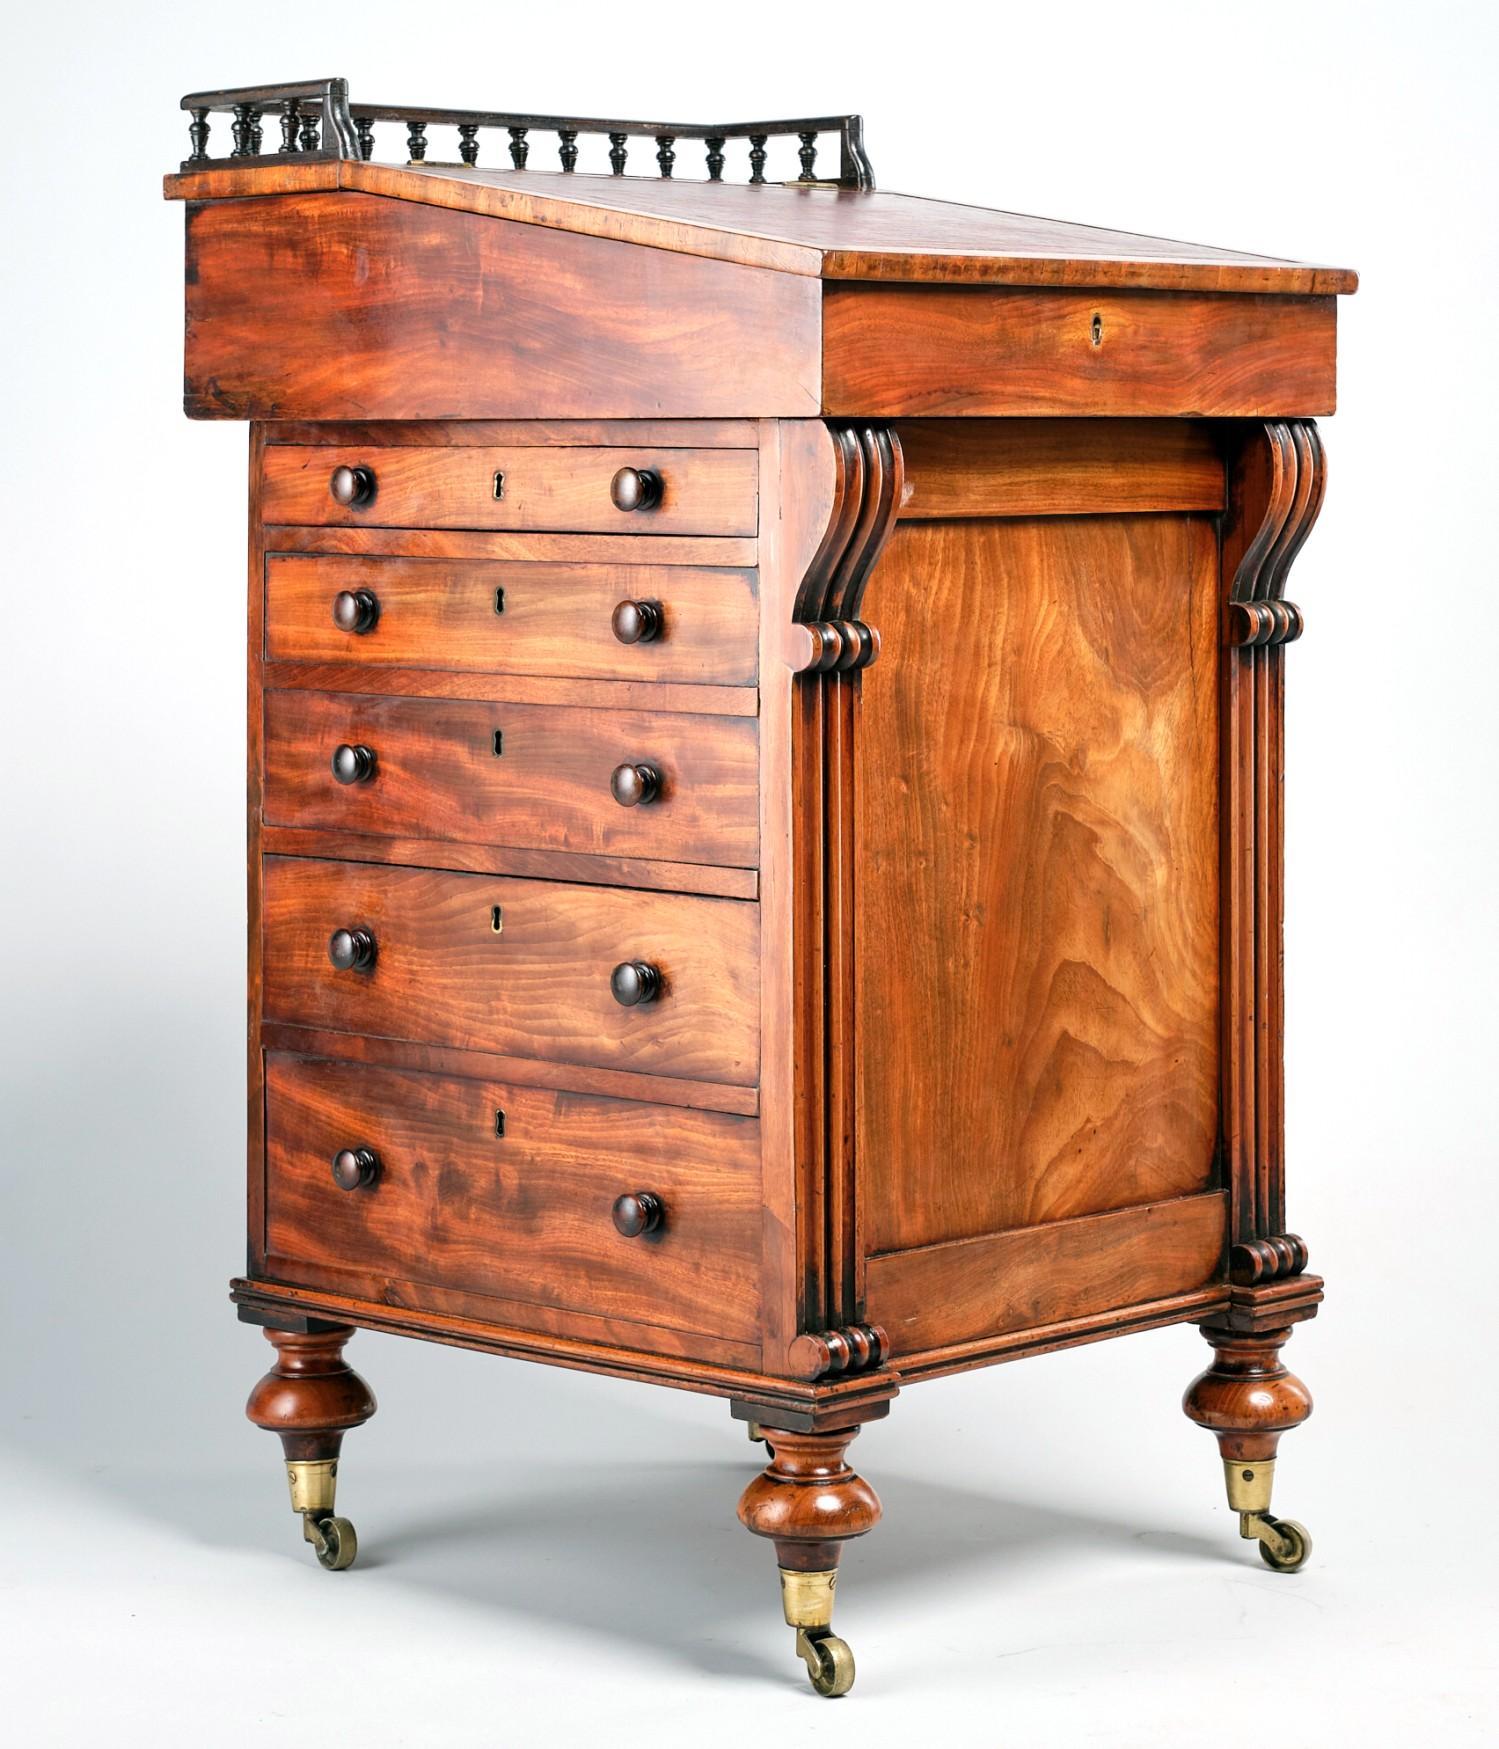 A Superior English Regency Period Davenport Desk in Figured Mahogany, Circa 1830 For Sale 5